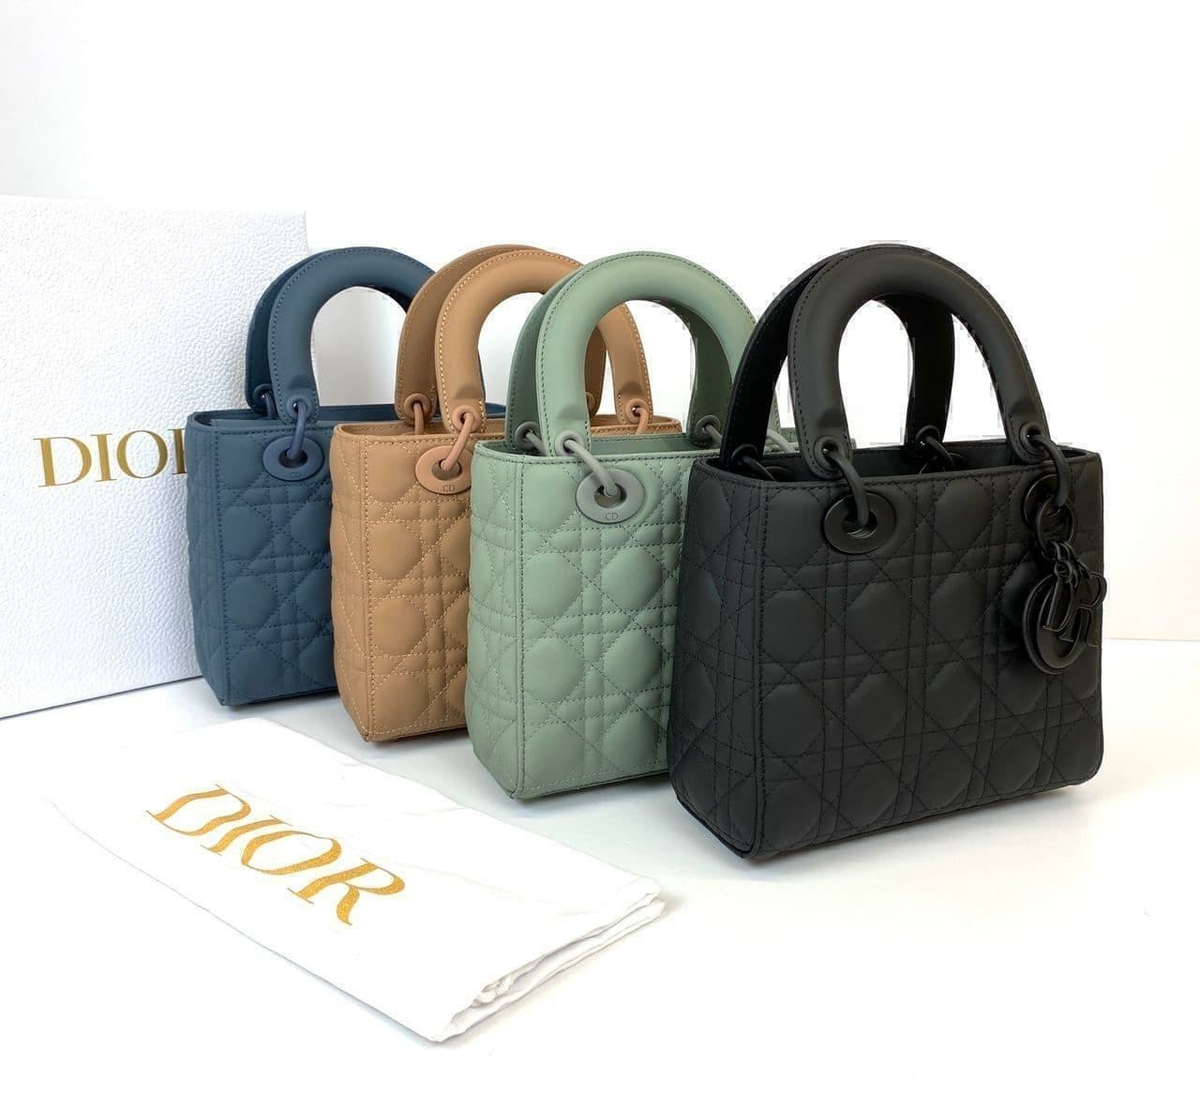 Dior сумка #1 в «Globestyle» арт.709993YO